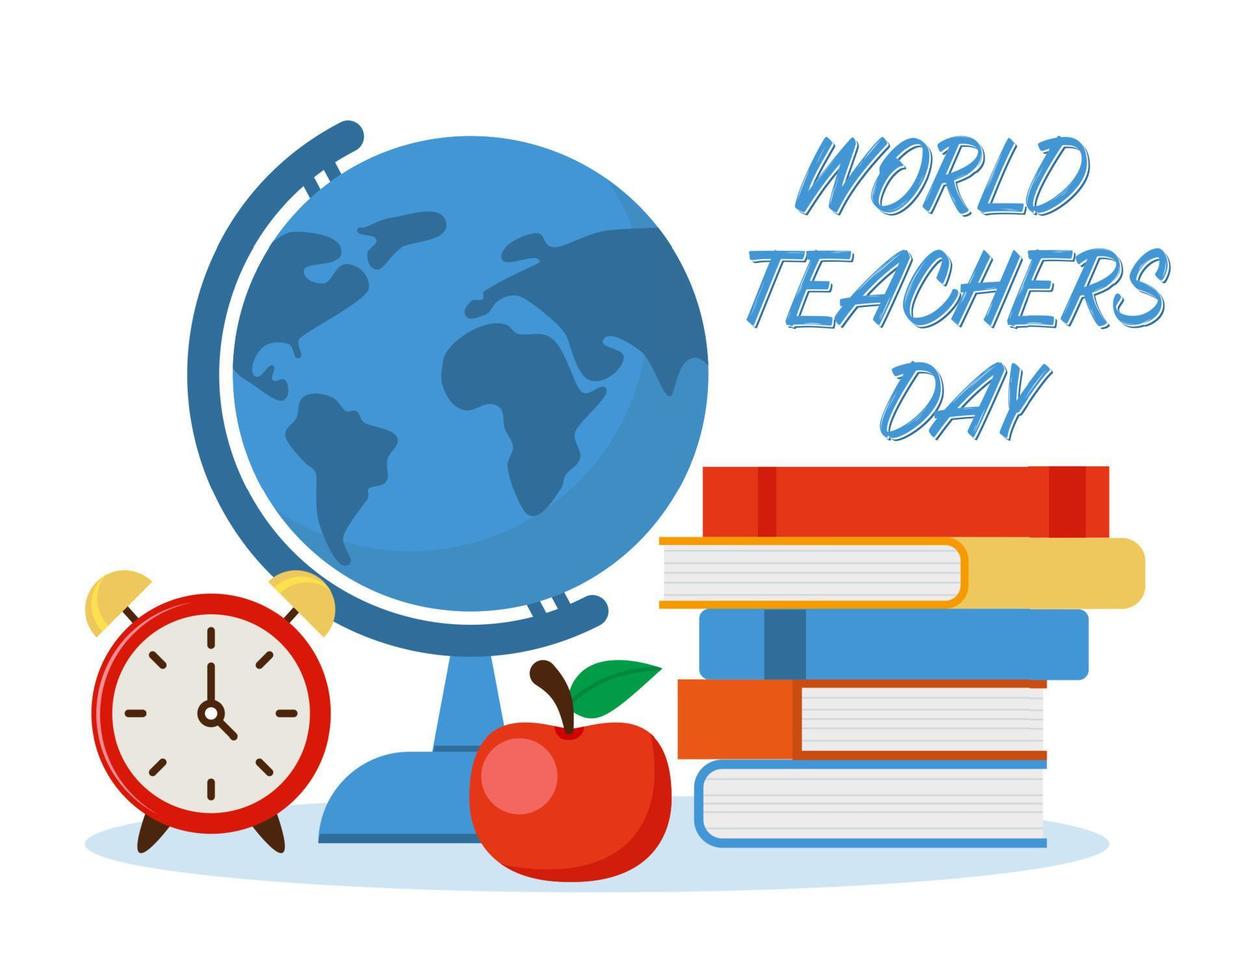 Teachers day celebration. Happy Teachers Day. Vector illustration in flat style